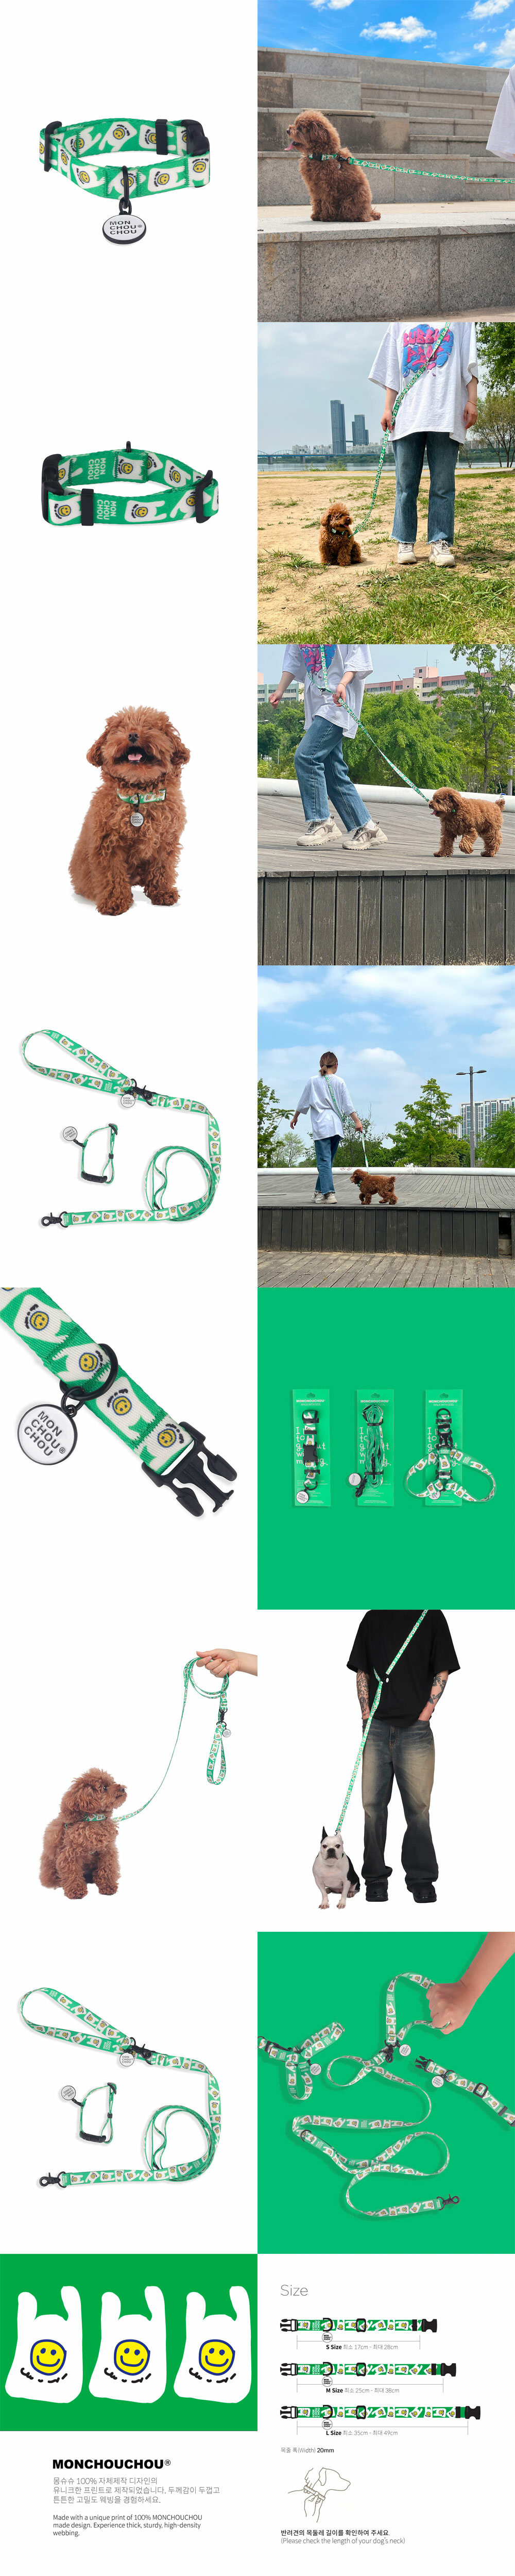 Walk-with-dog_Collar-Plastic-Bag-Info.jpg